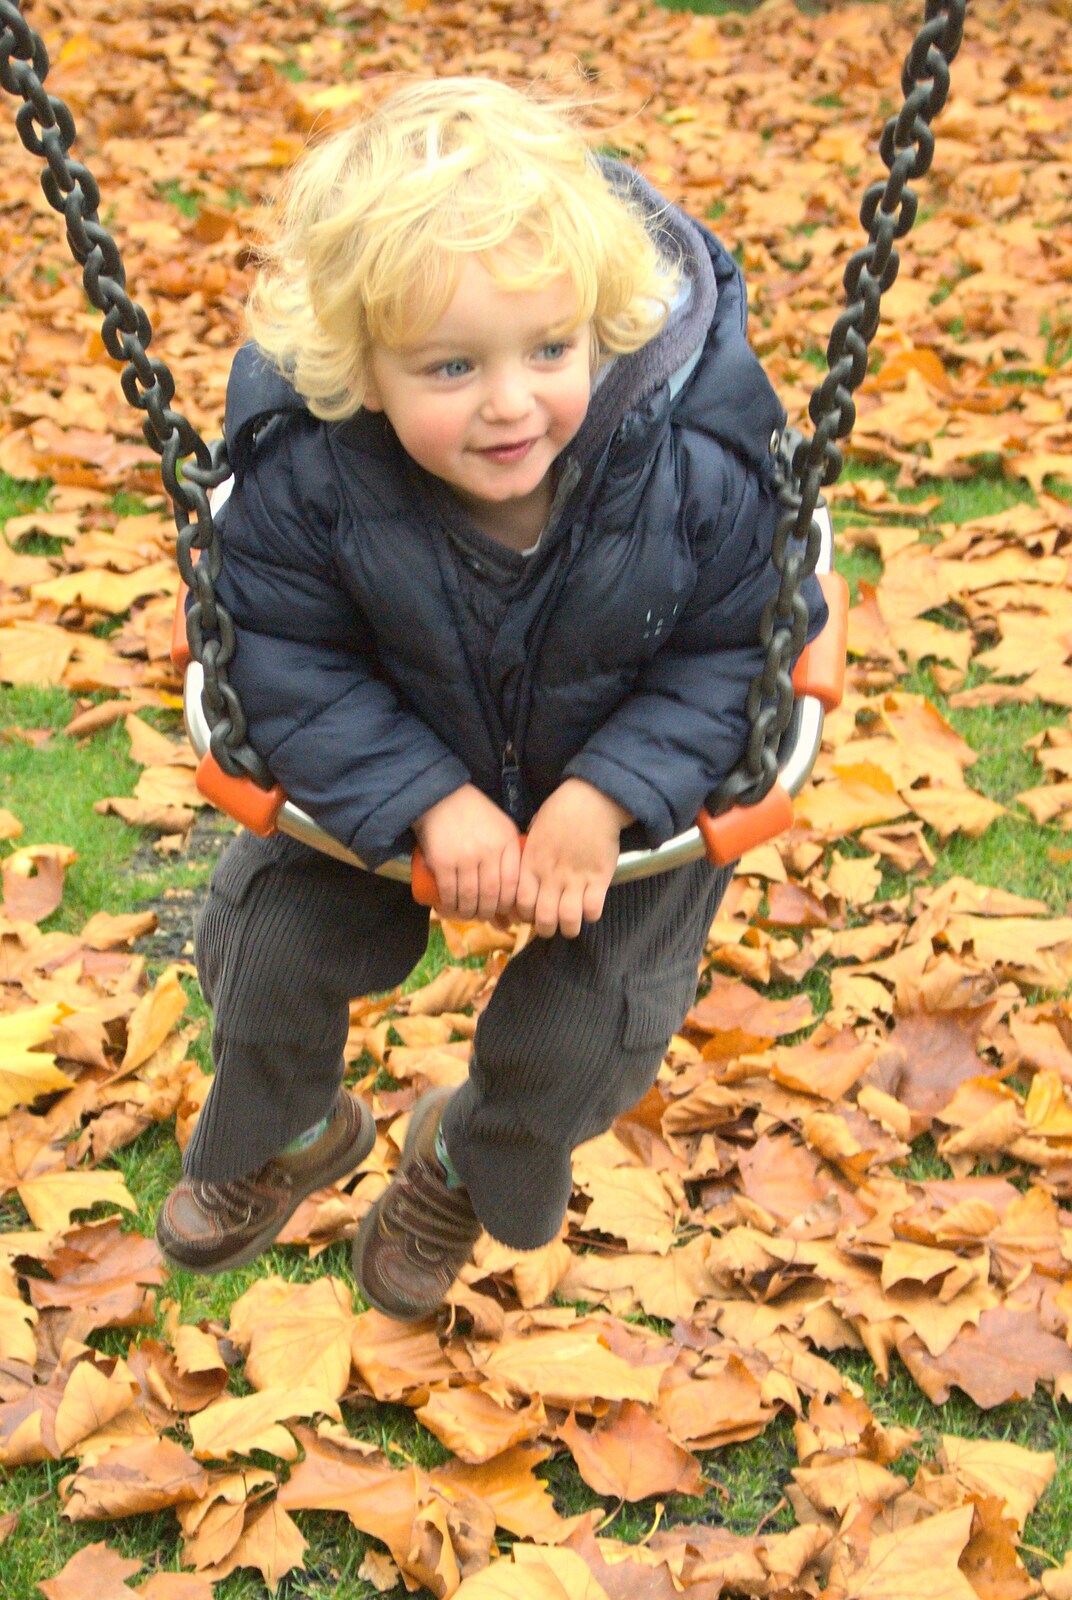 Fred on a swing from Autumn in Thornham Estate, Thornham, Suffolk - 6th November 2011